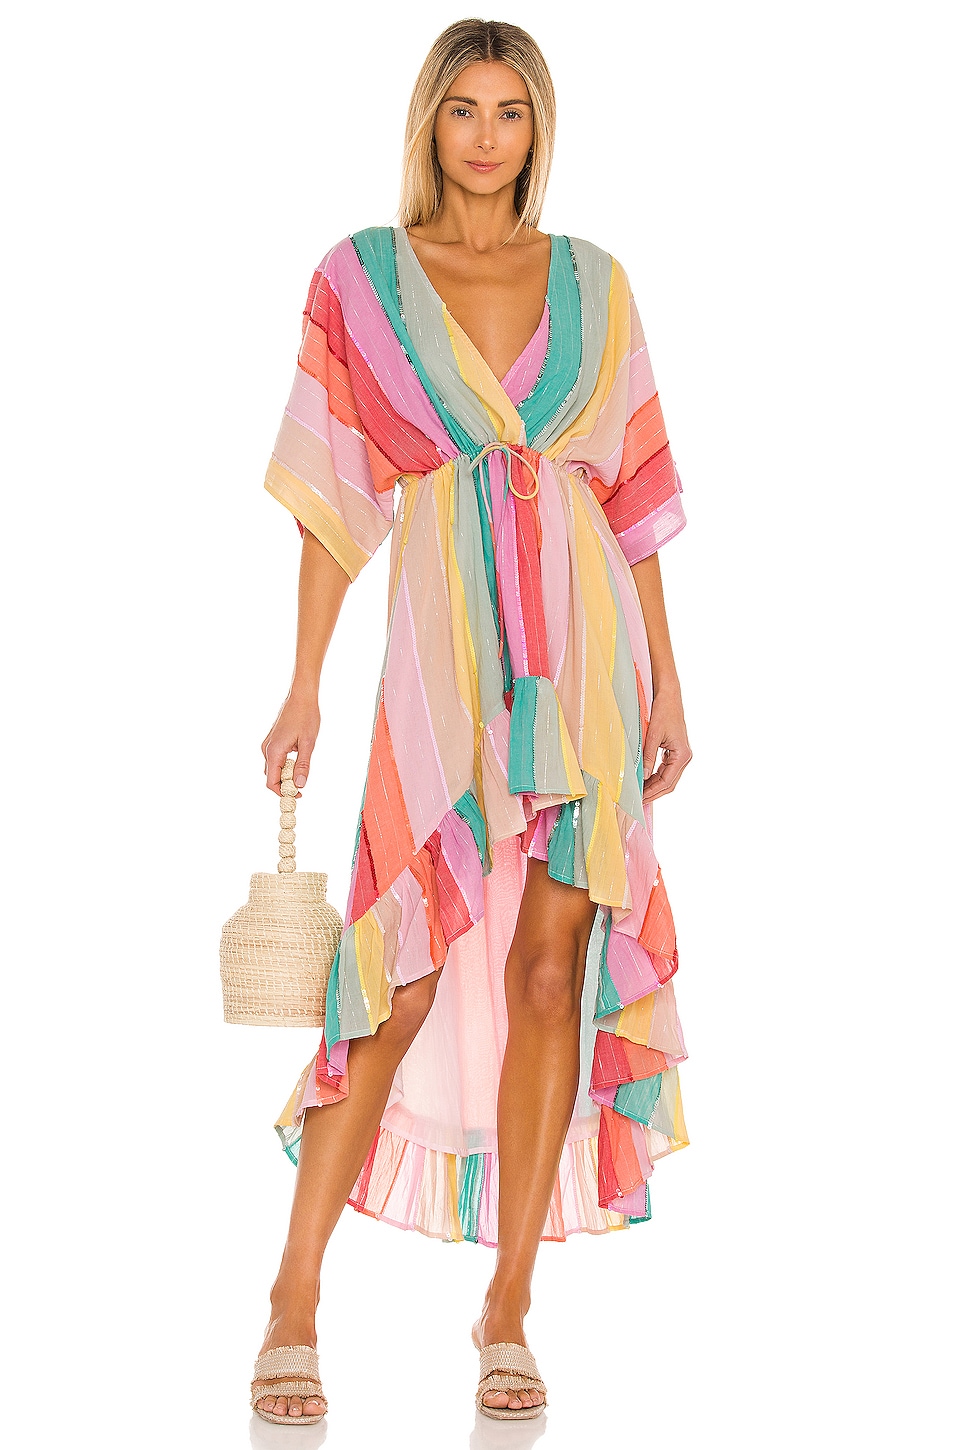 Sundress Deva Dress in Multicolor Stripes And Sequins